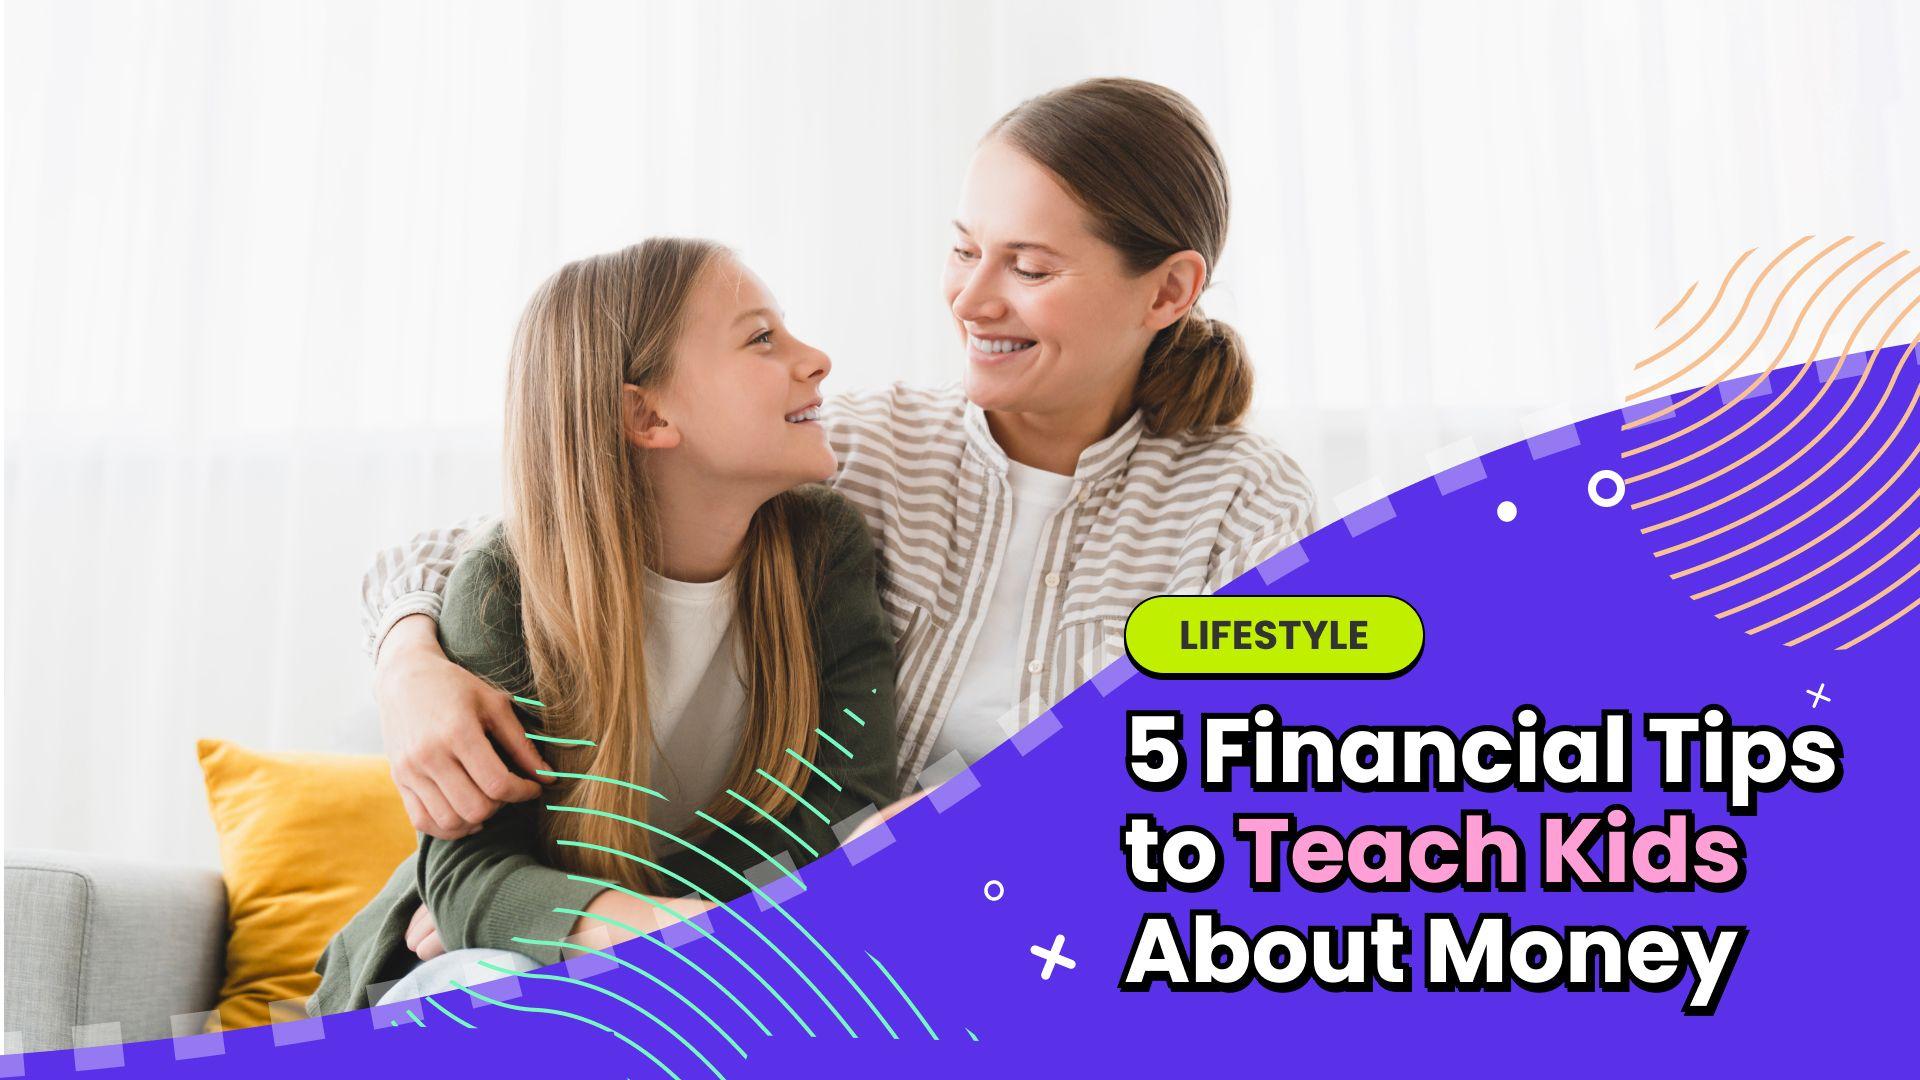 5 Financial Tips to Teach Kids About Money (1).jpg